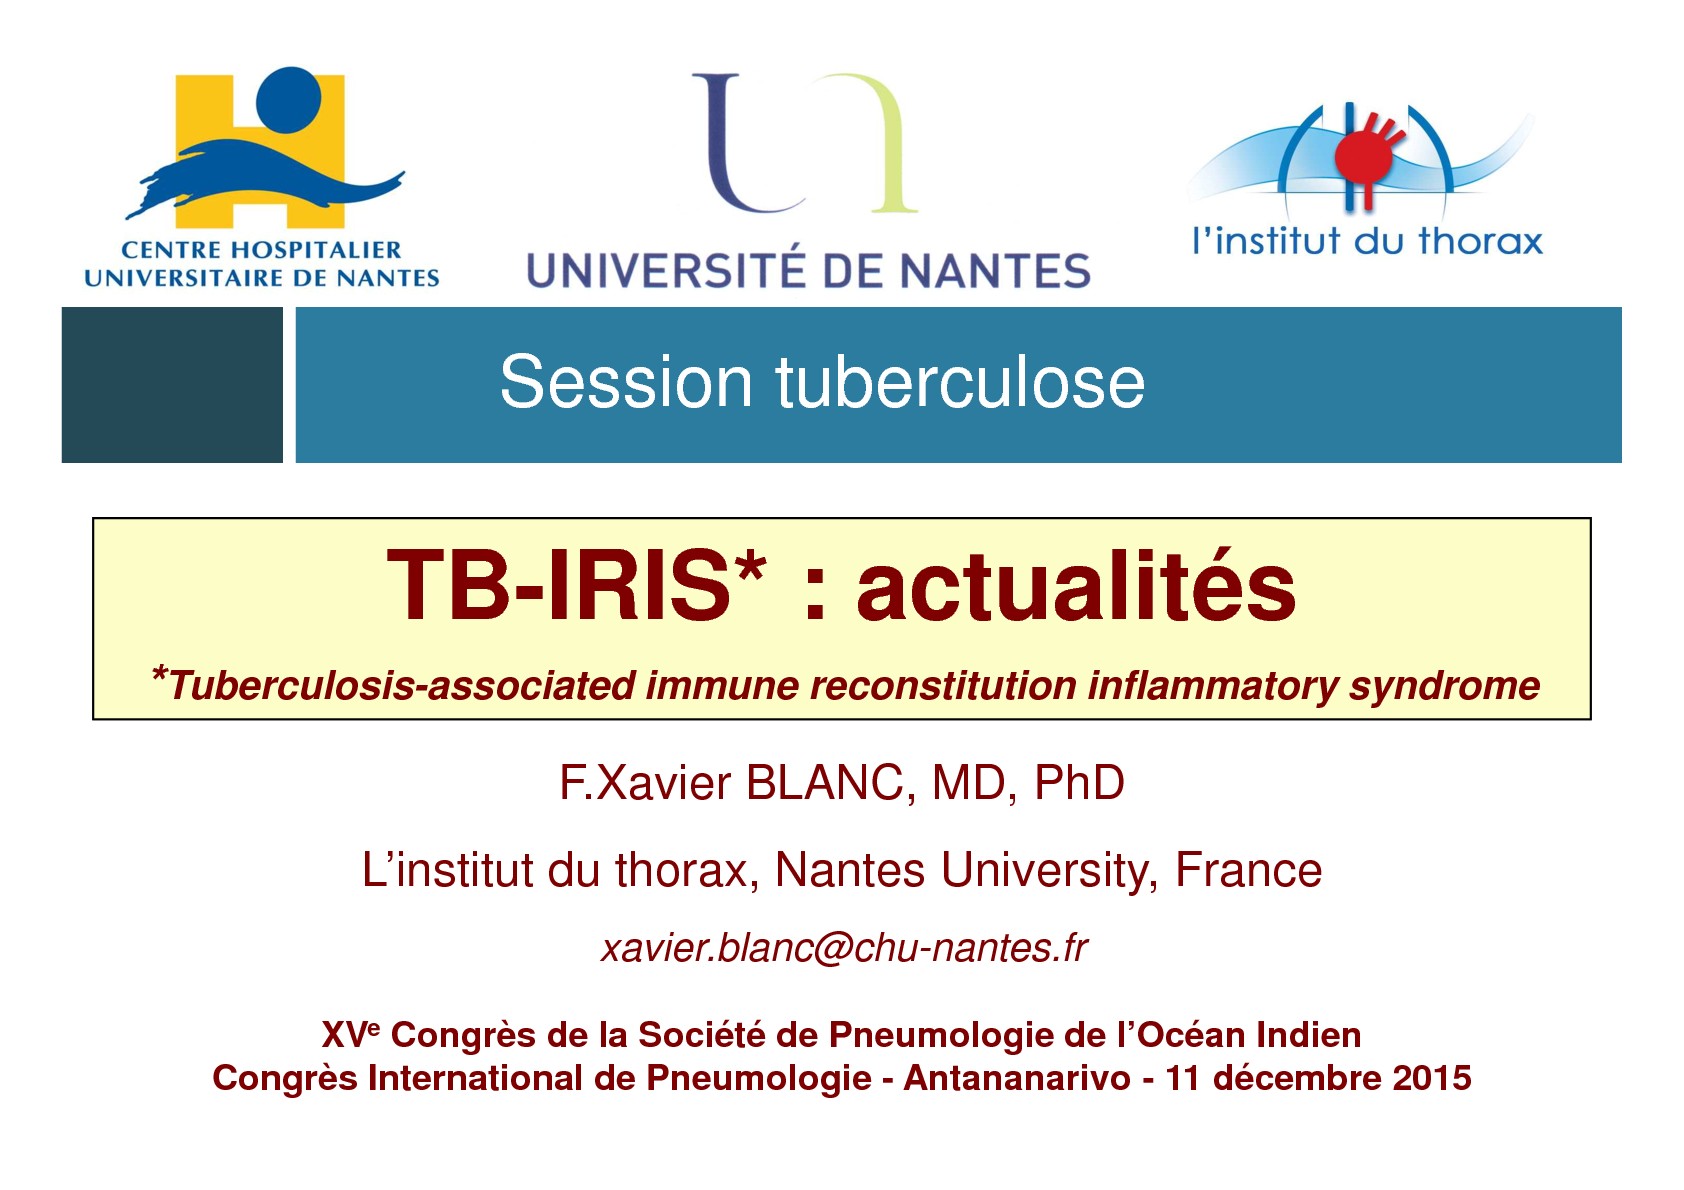 TB-IRIS actualités. F. Xavier Blanc